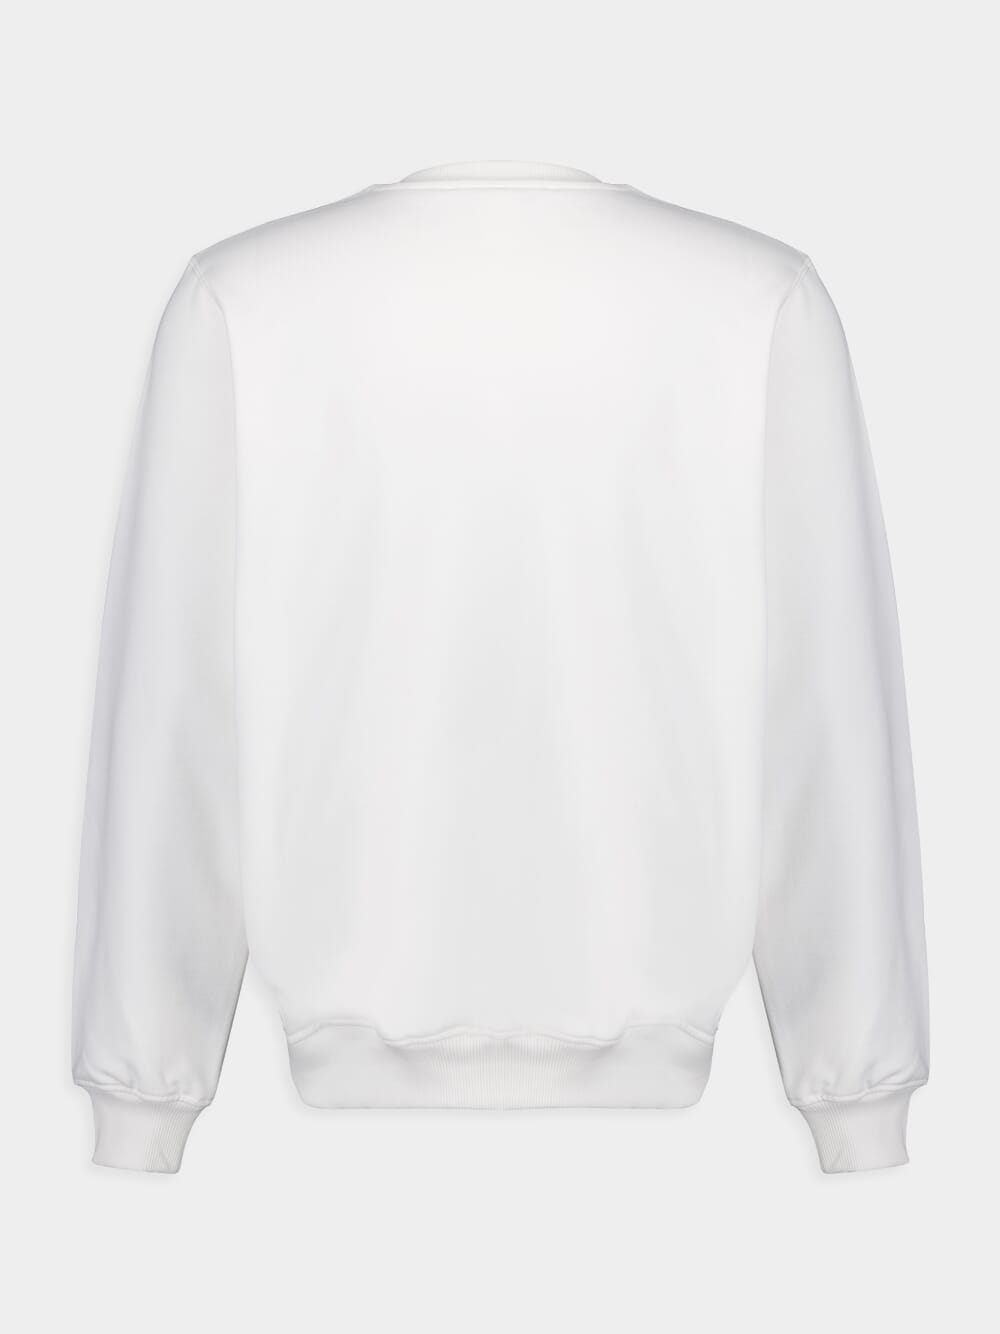 CasablancaTennis Club Icon Cotton Sweatshirt at Fashion Clinic